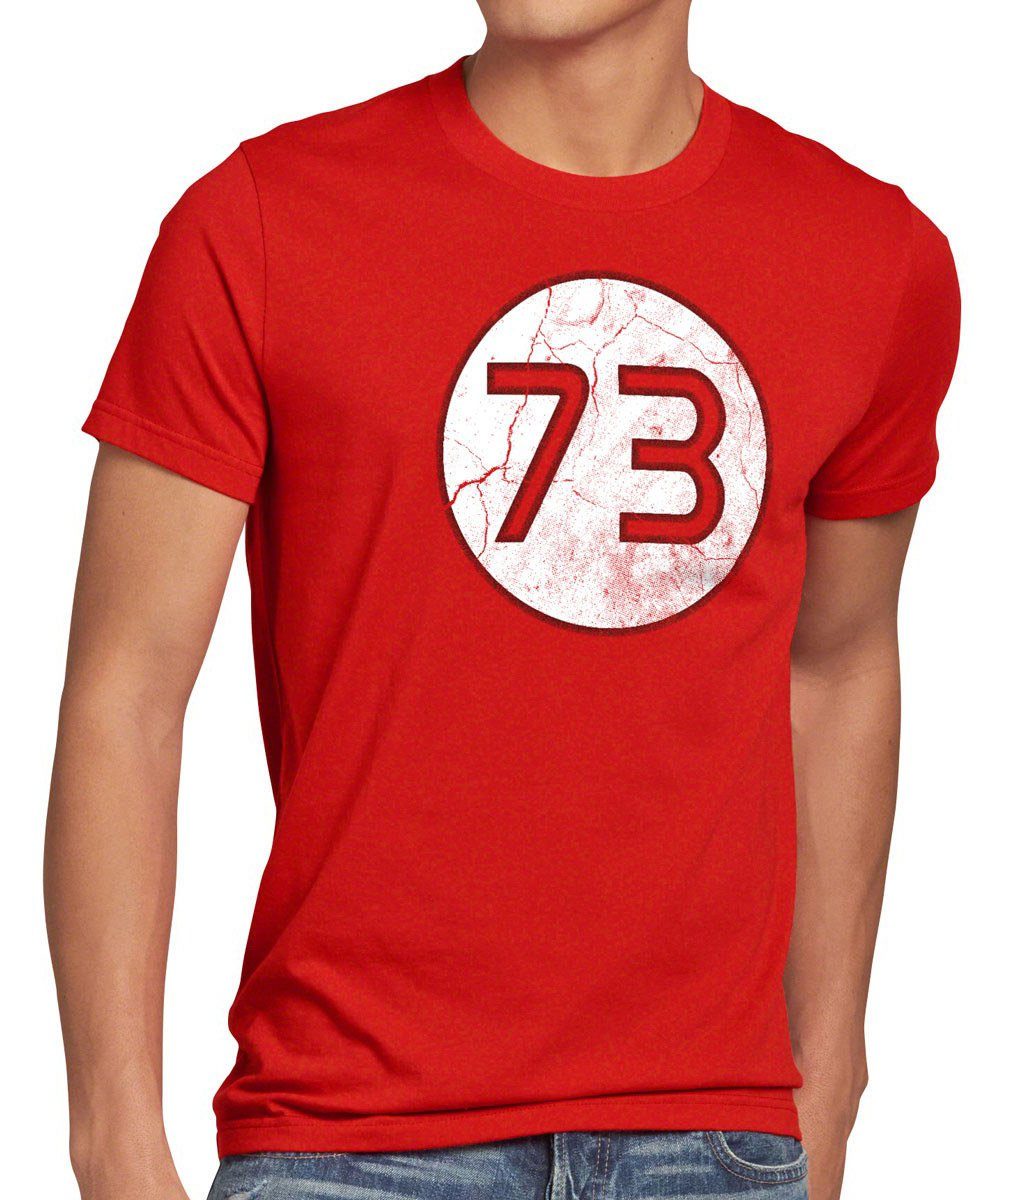 theory tbbt Print-Shirt cooper Lieblingszahl zahl Sheldon style3 leonard rot bang big 73 T-Shirt Herren